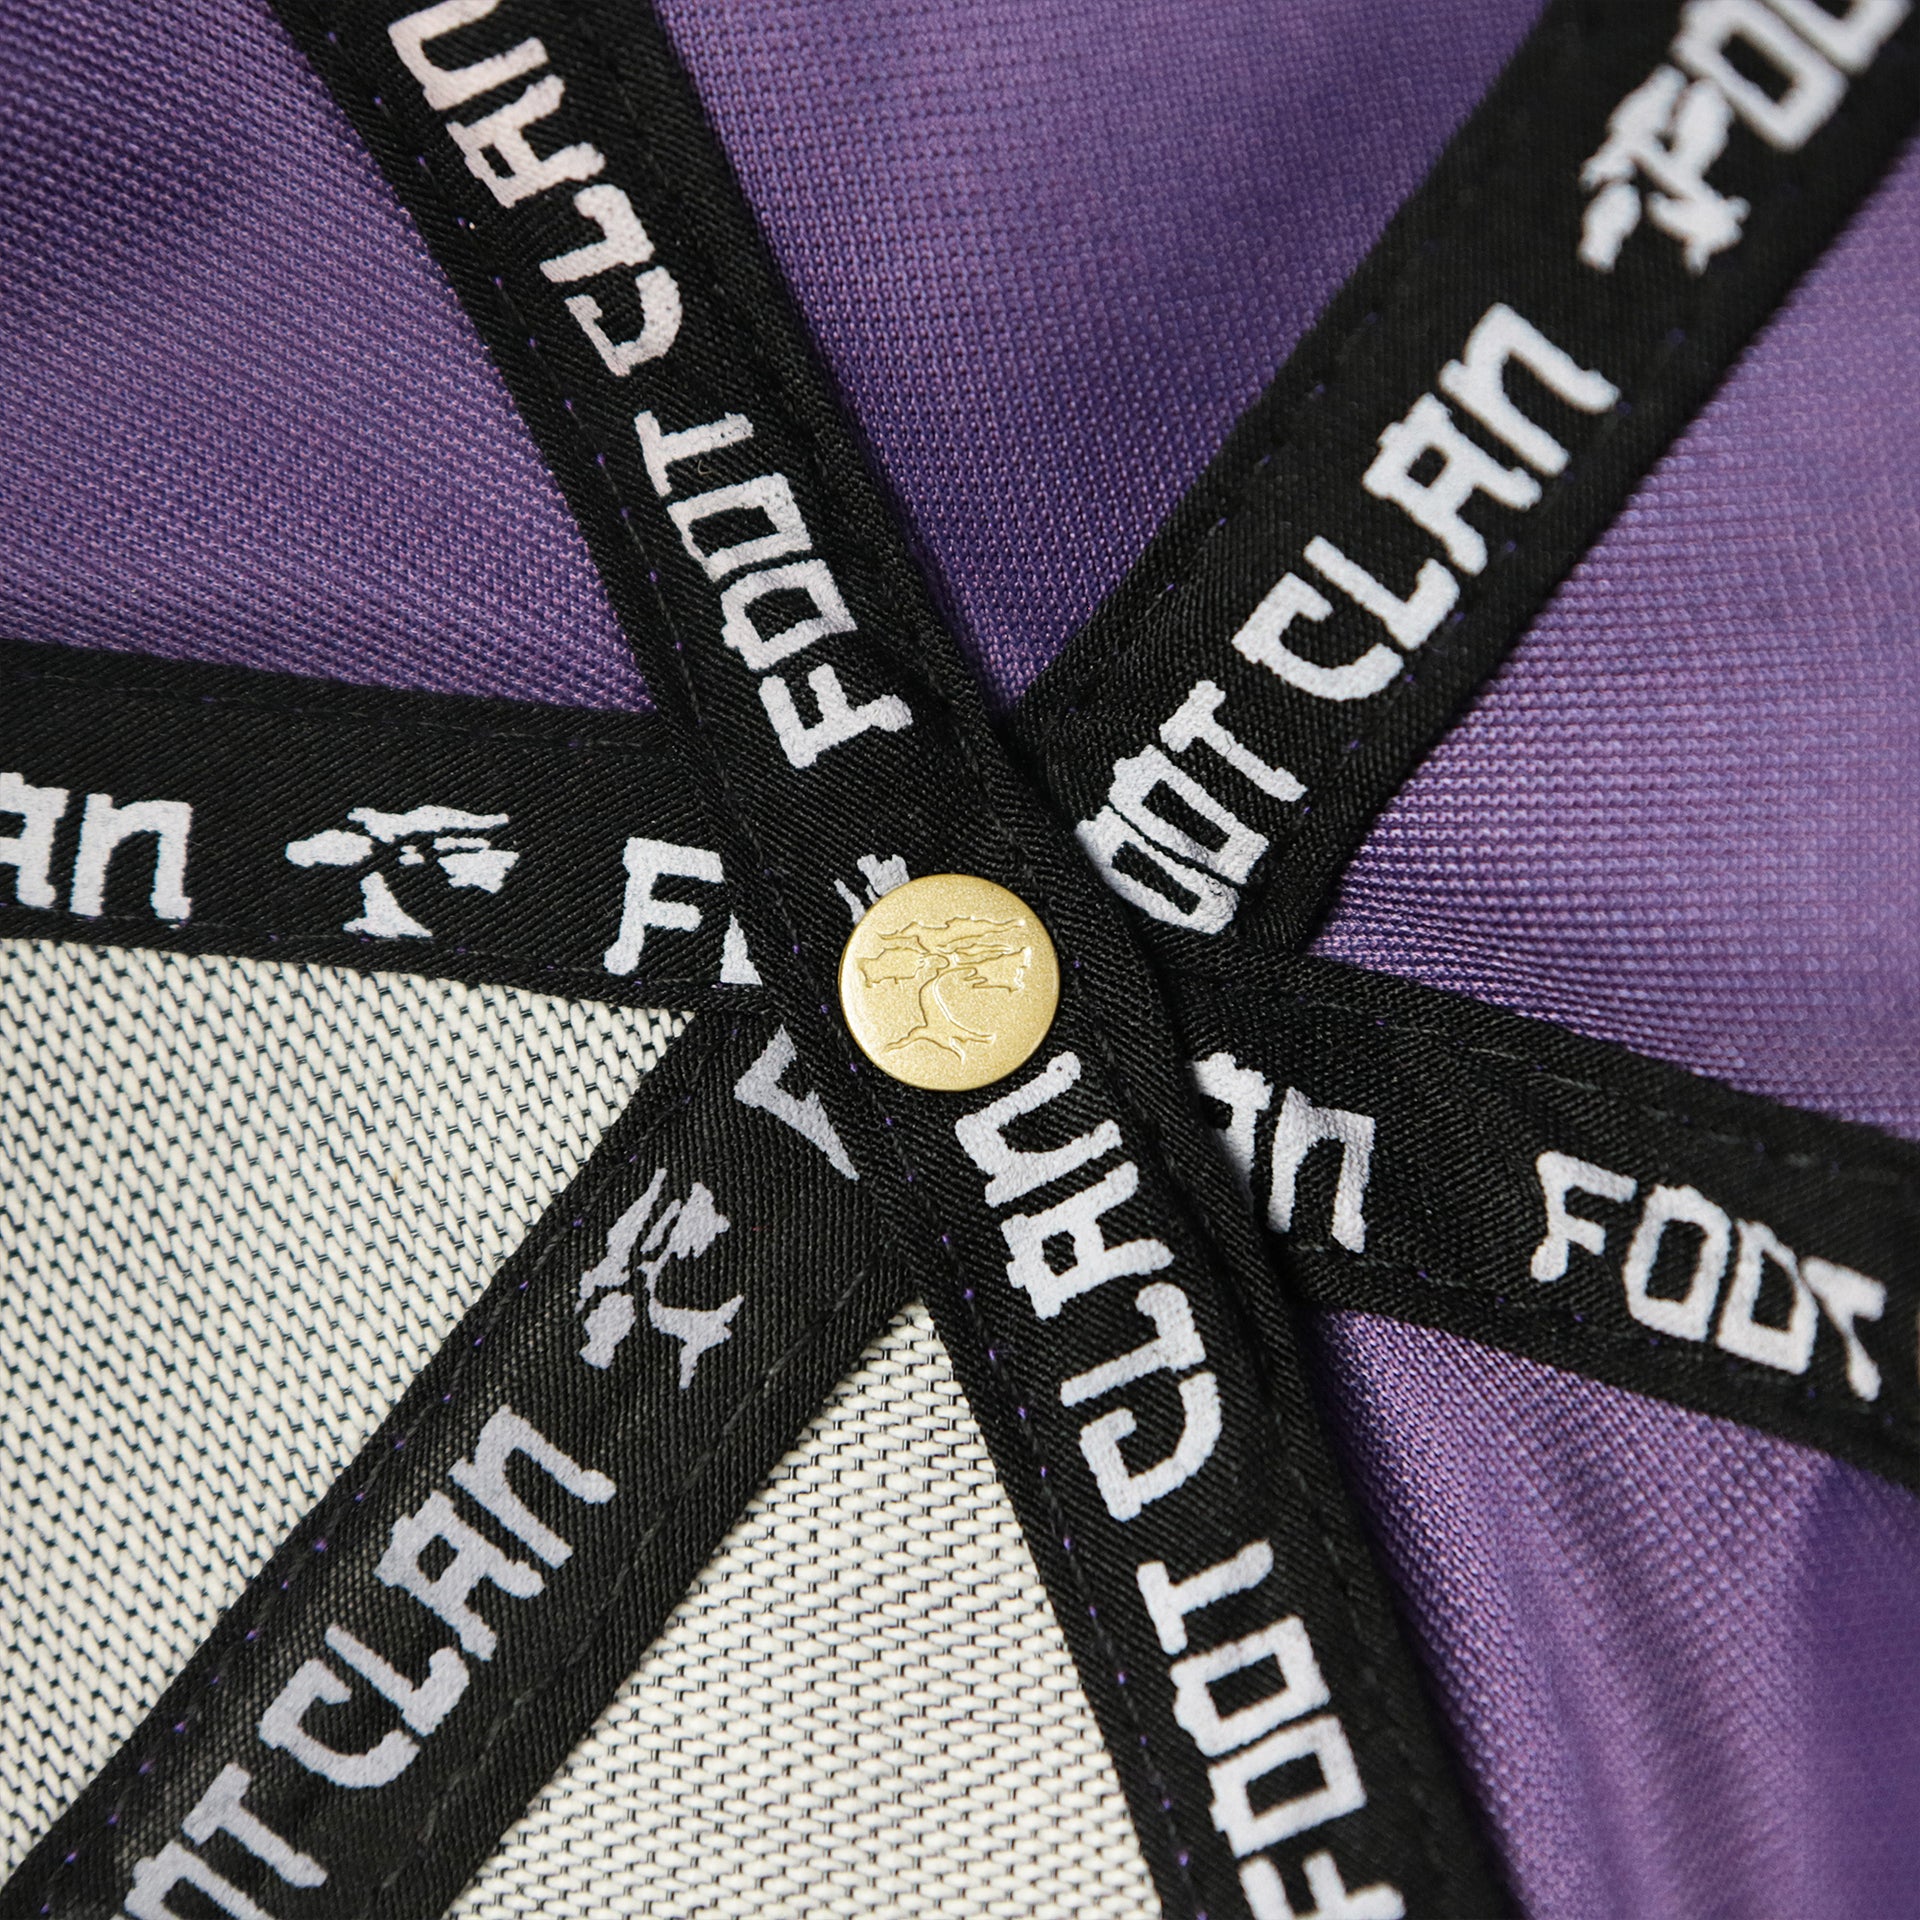 The Bonsai Tree Engraved Button on the Velour Blank Concord Grape Snapback Cap | Purple Snap Cap